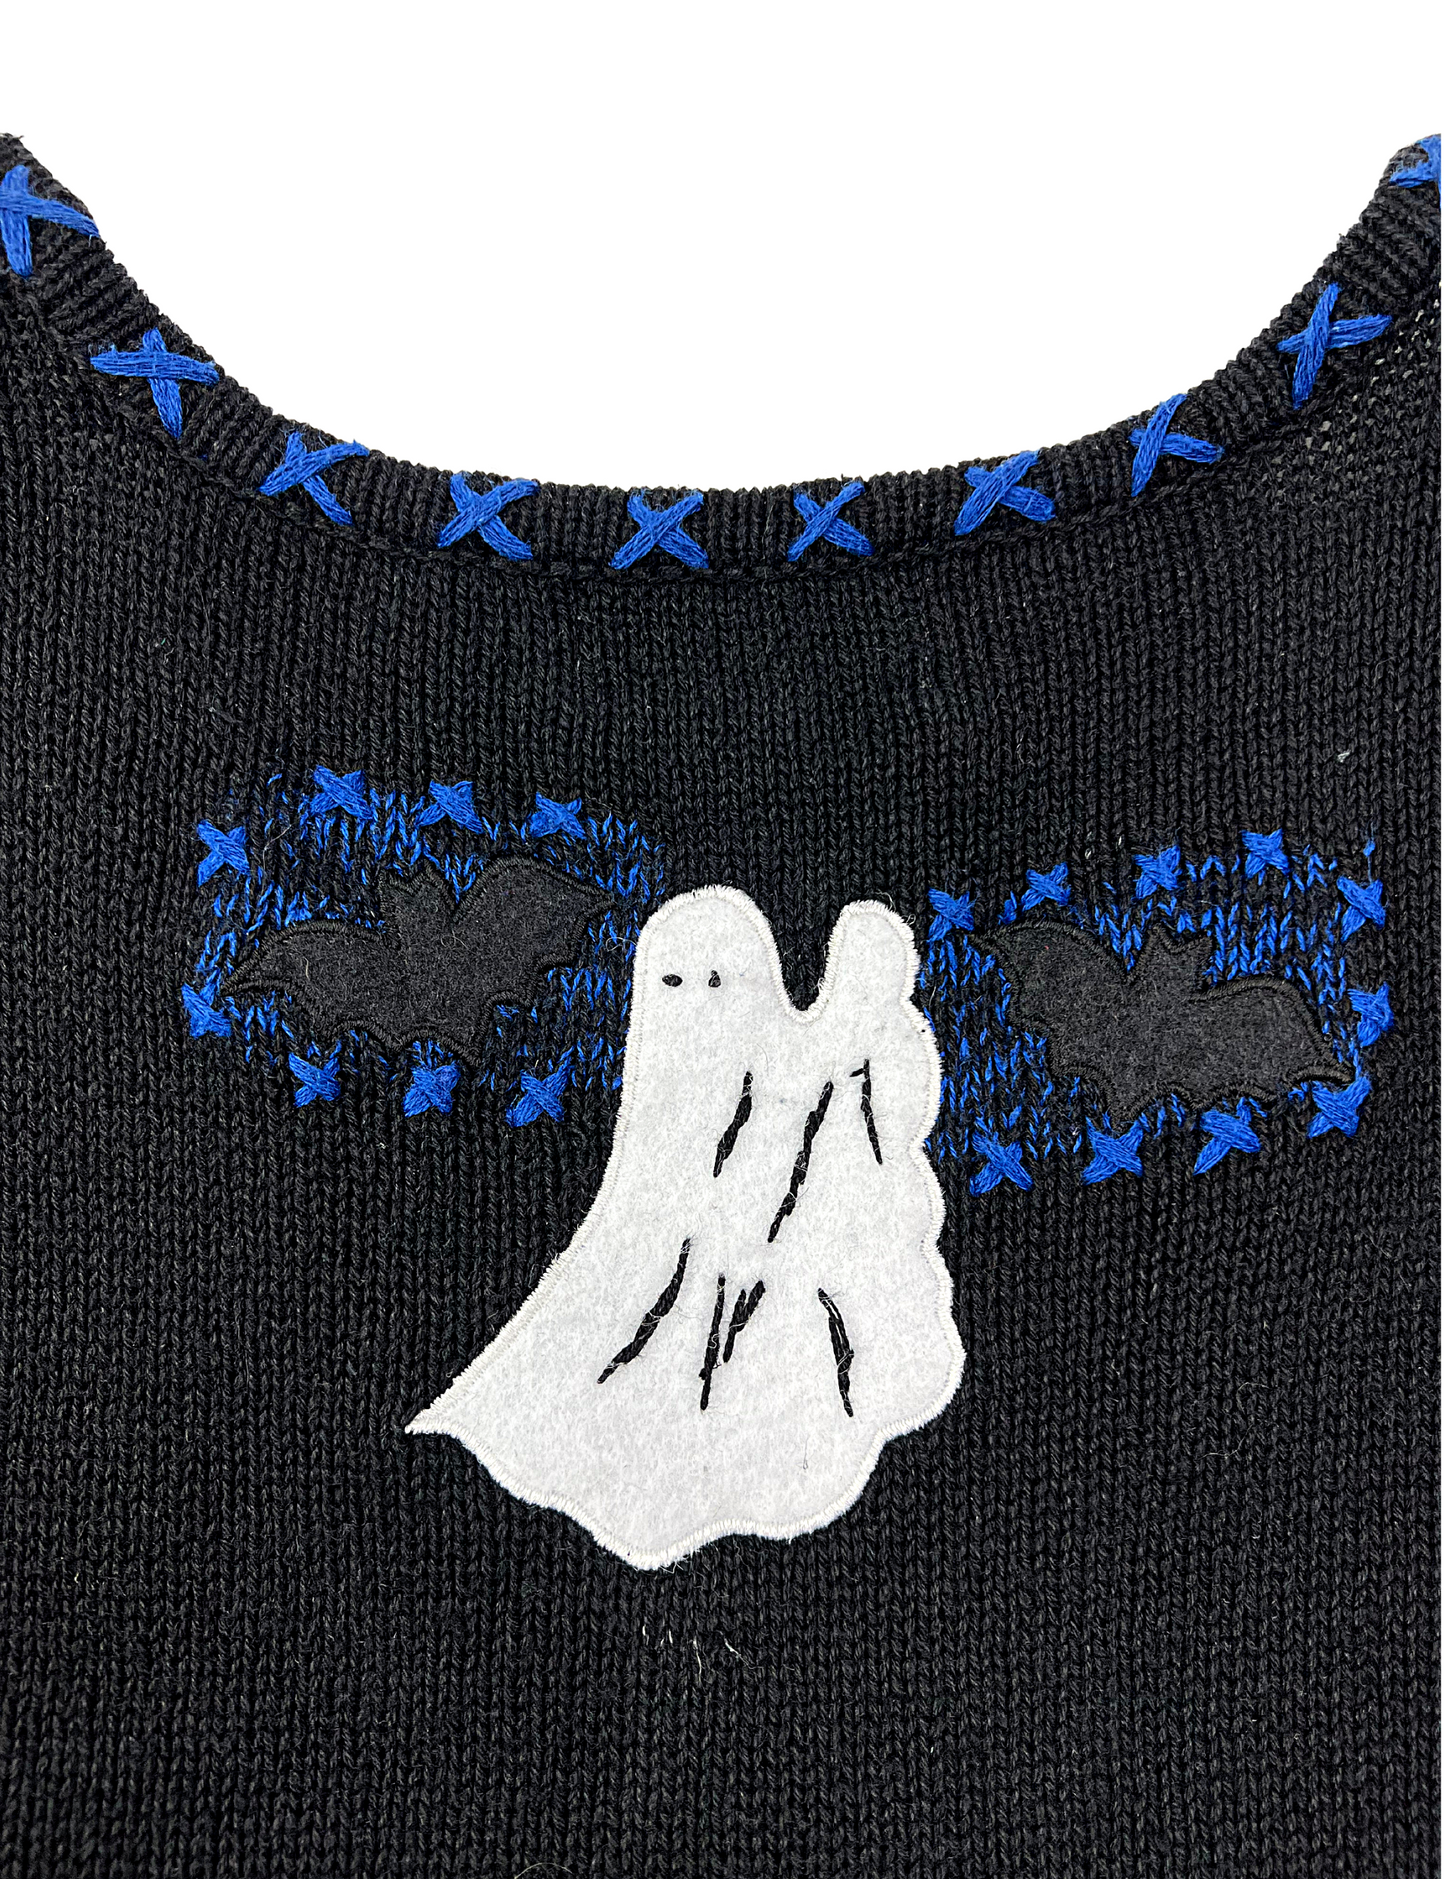 90’s Halloween Trick or Treat Pumpkins Chunky Sweater Vest